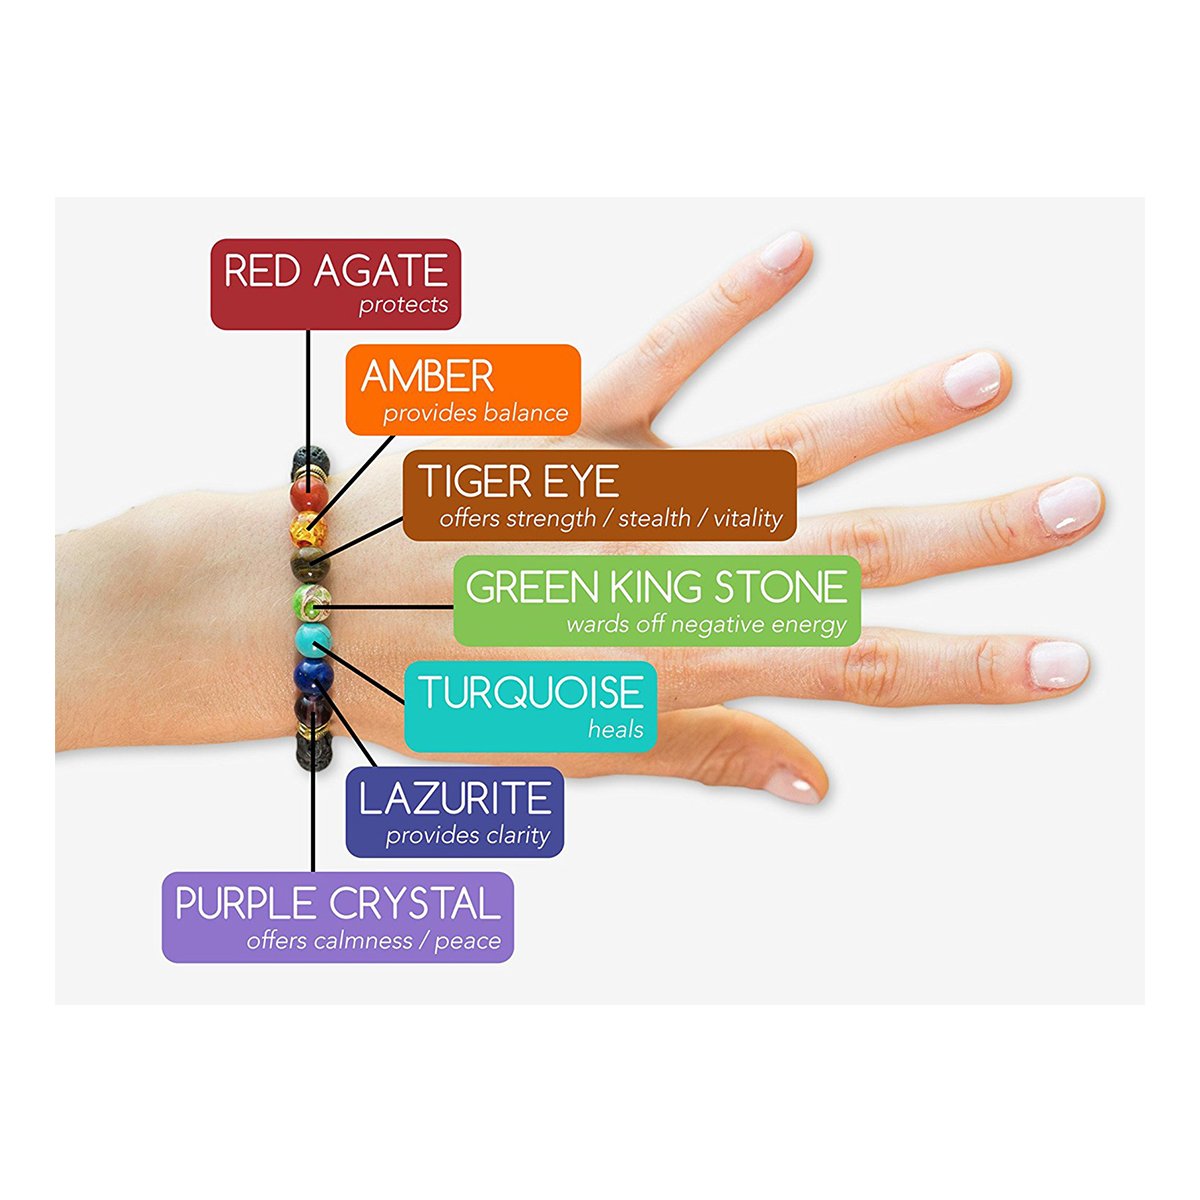 7 Chakra Reiki Healing Yoga Meditation Lava Onyx Beads Bracelet